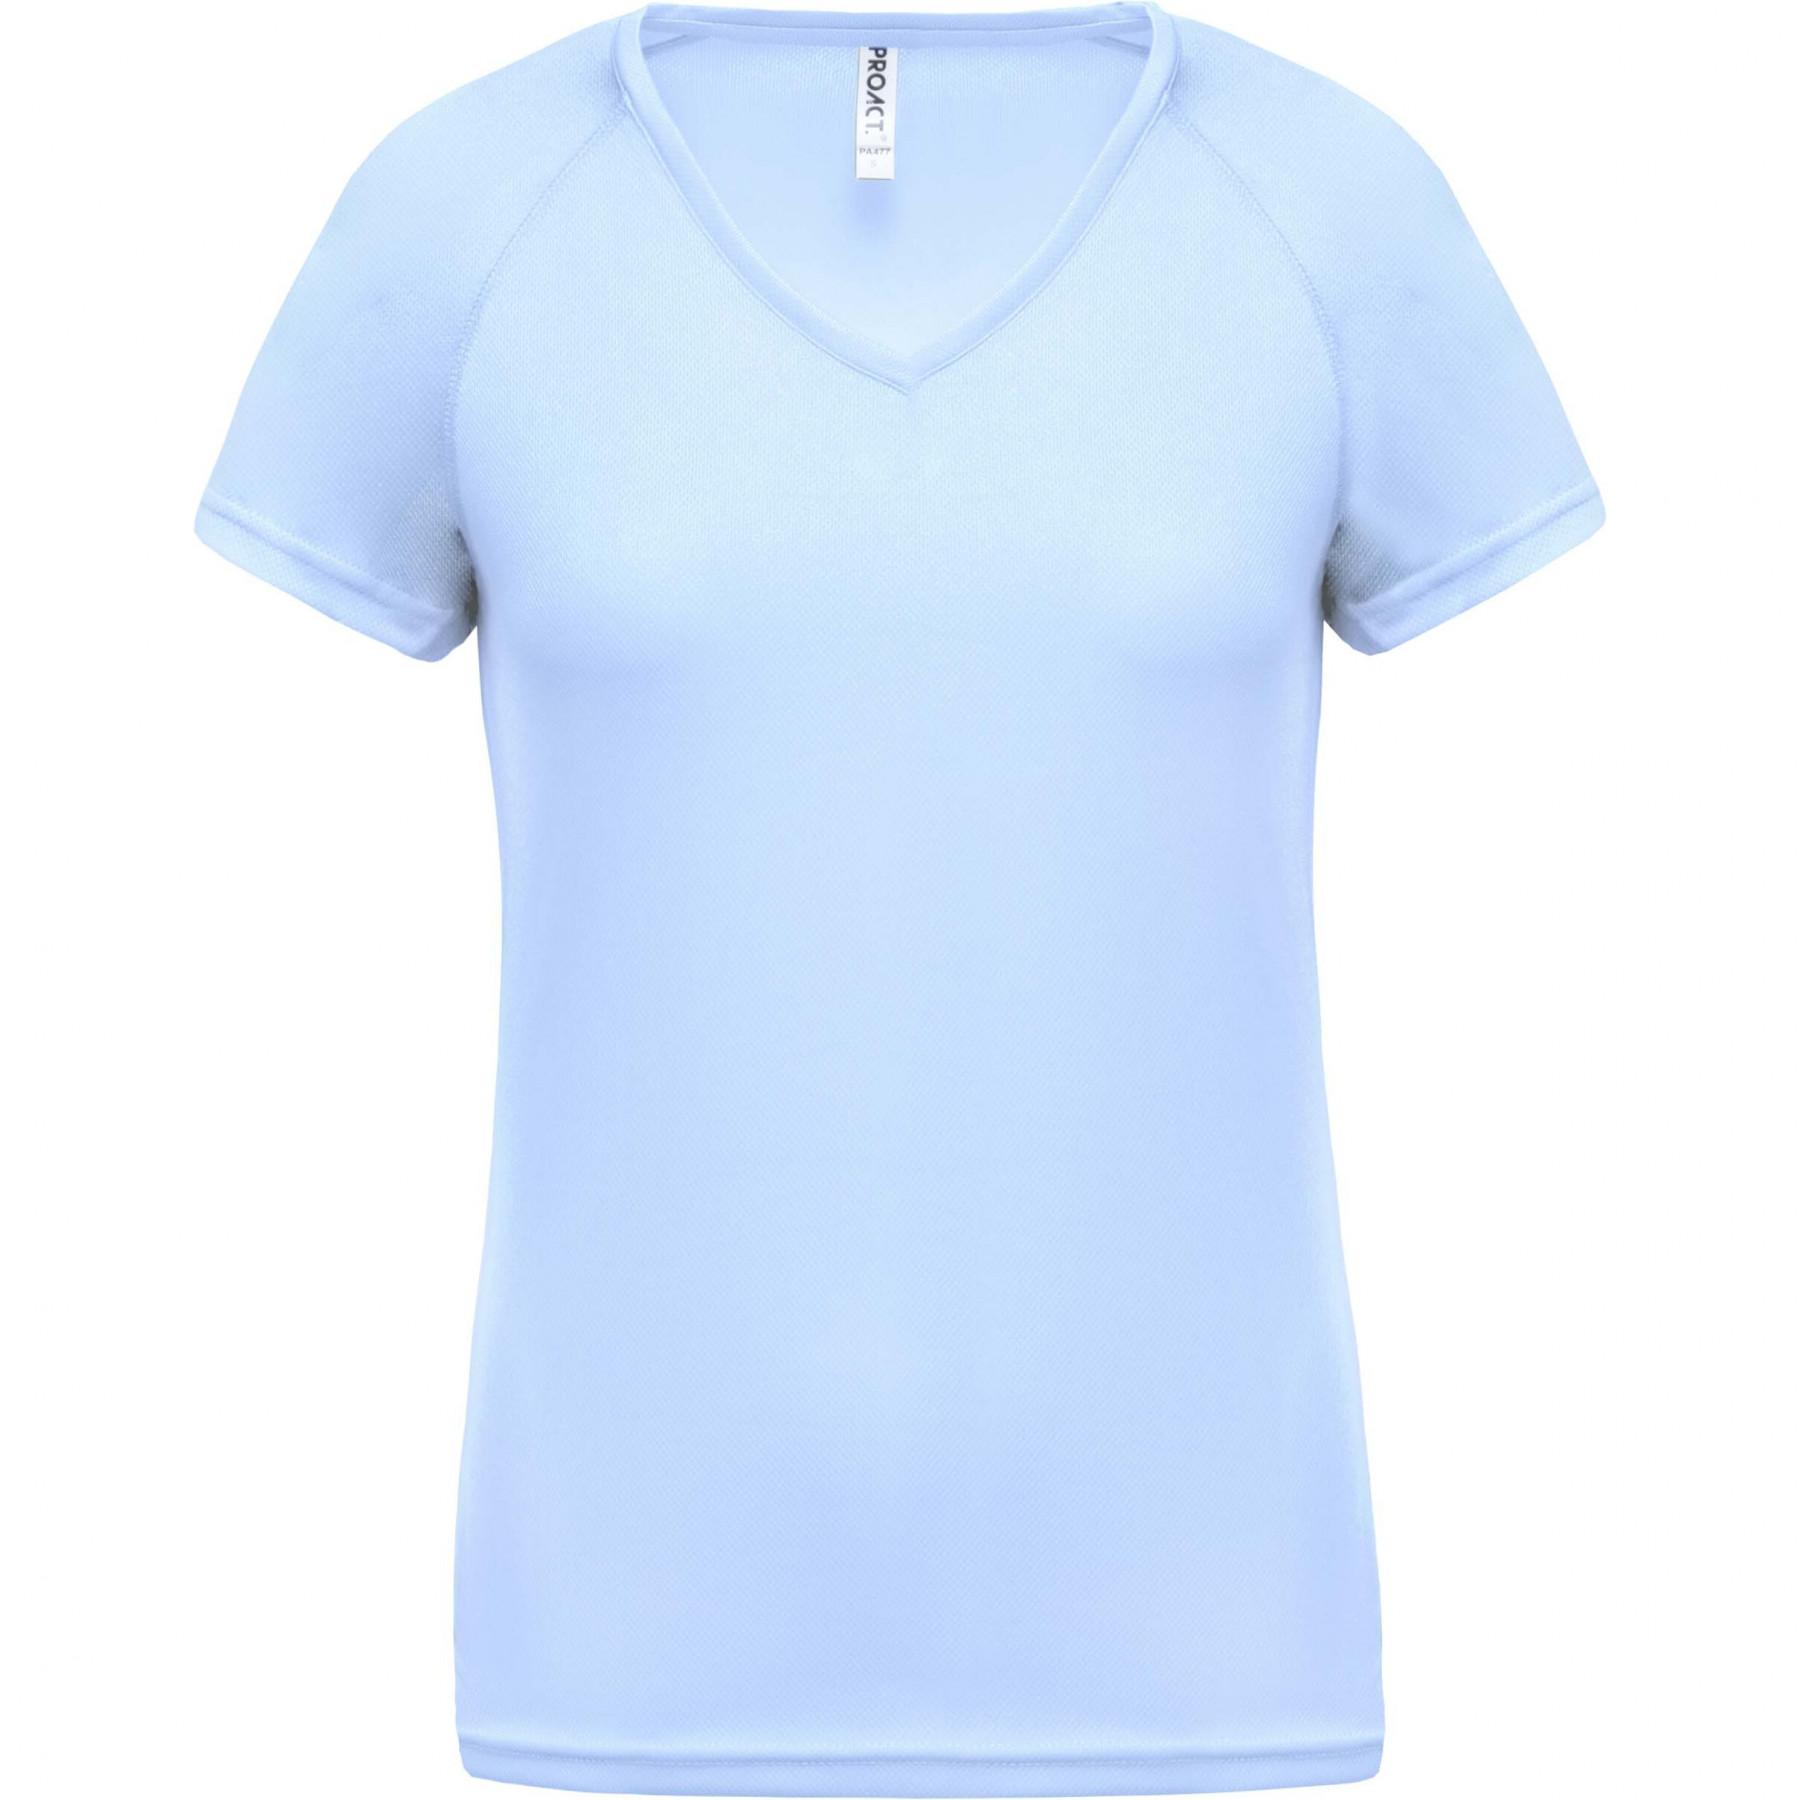 Dames-T-shirt met v-hals Proact Sport